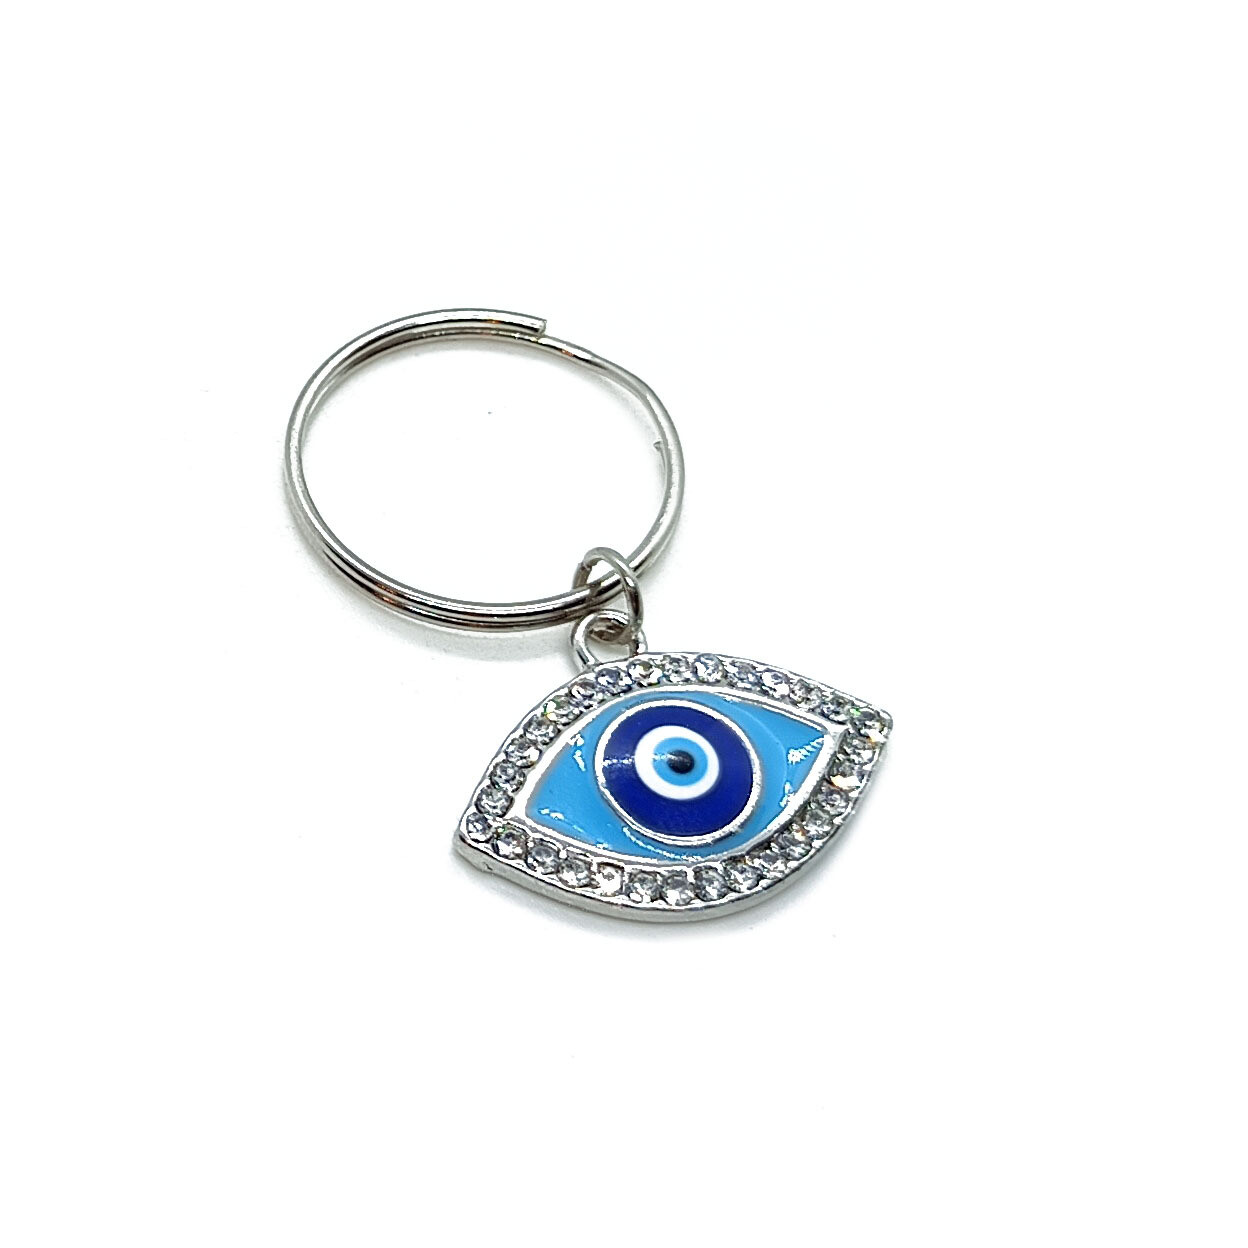 Evil eye key chain